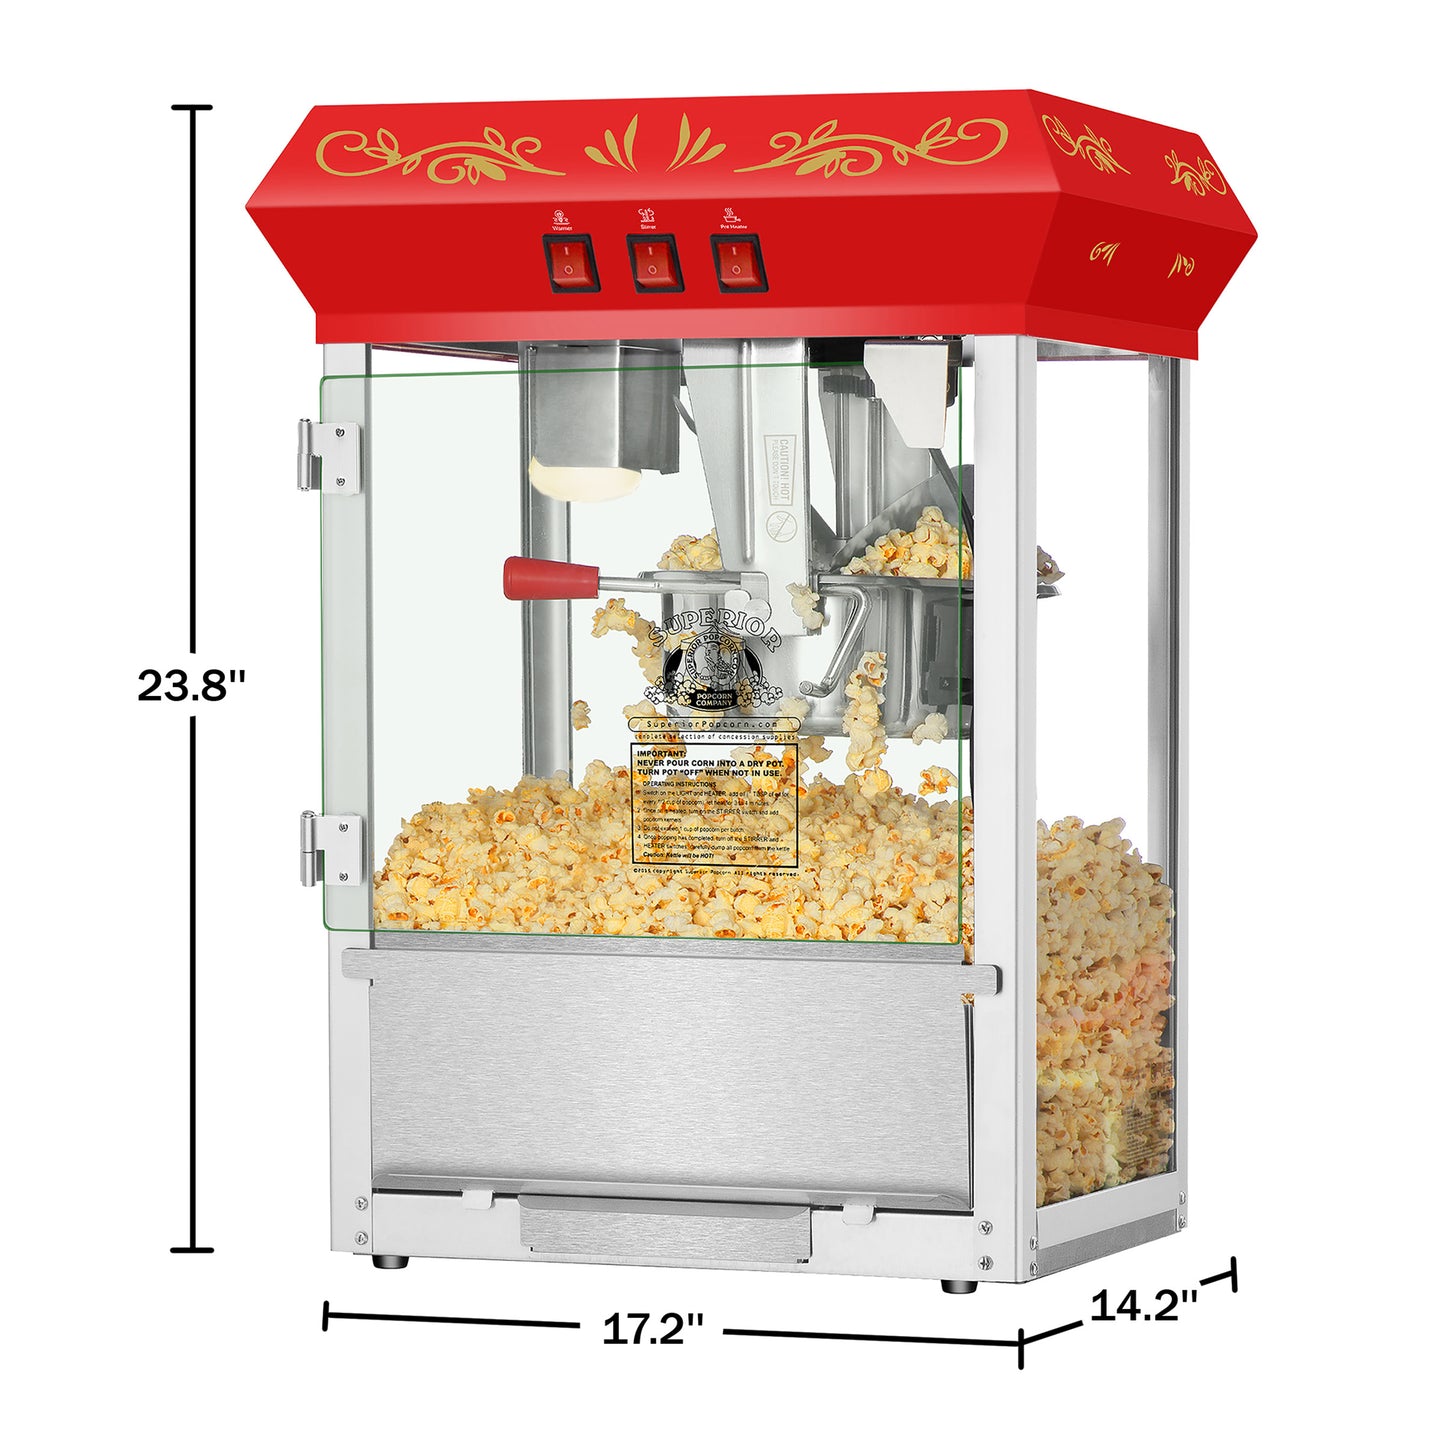 Movie Night 8oz Countertop Popcorn Machine, Red